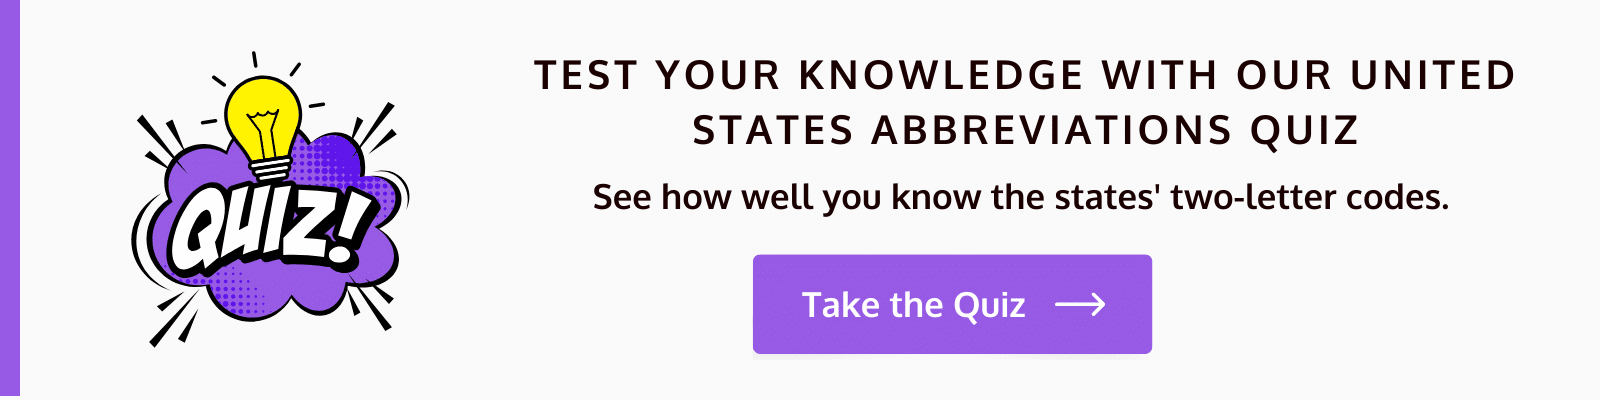 United States Abbreviations Quiz